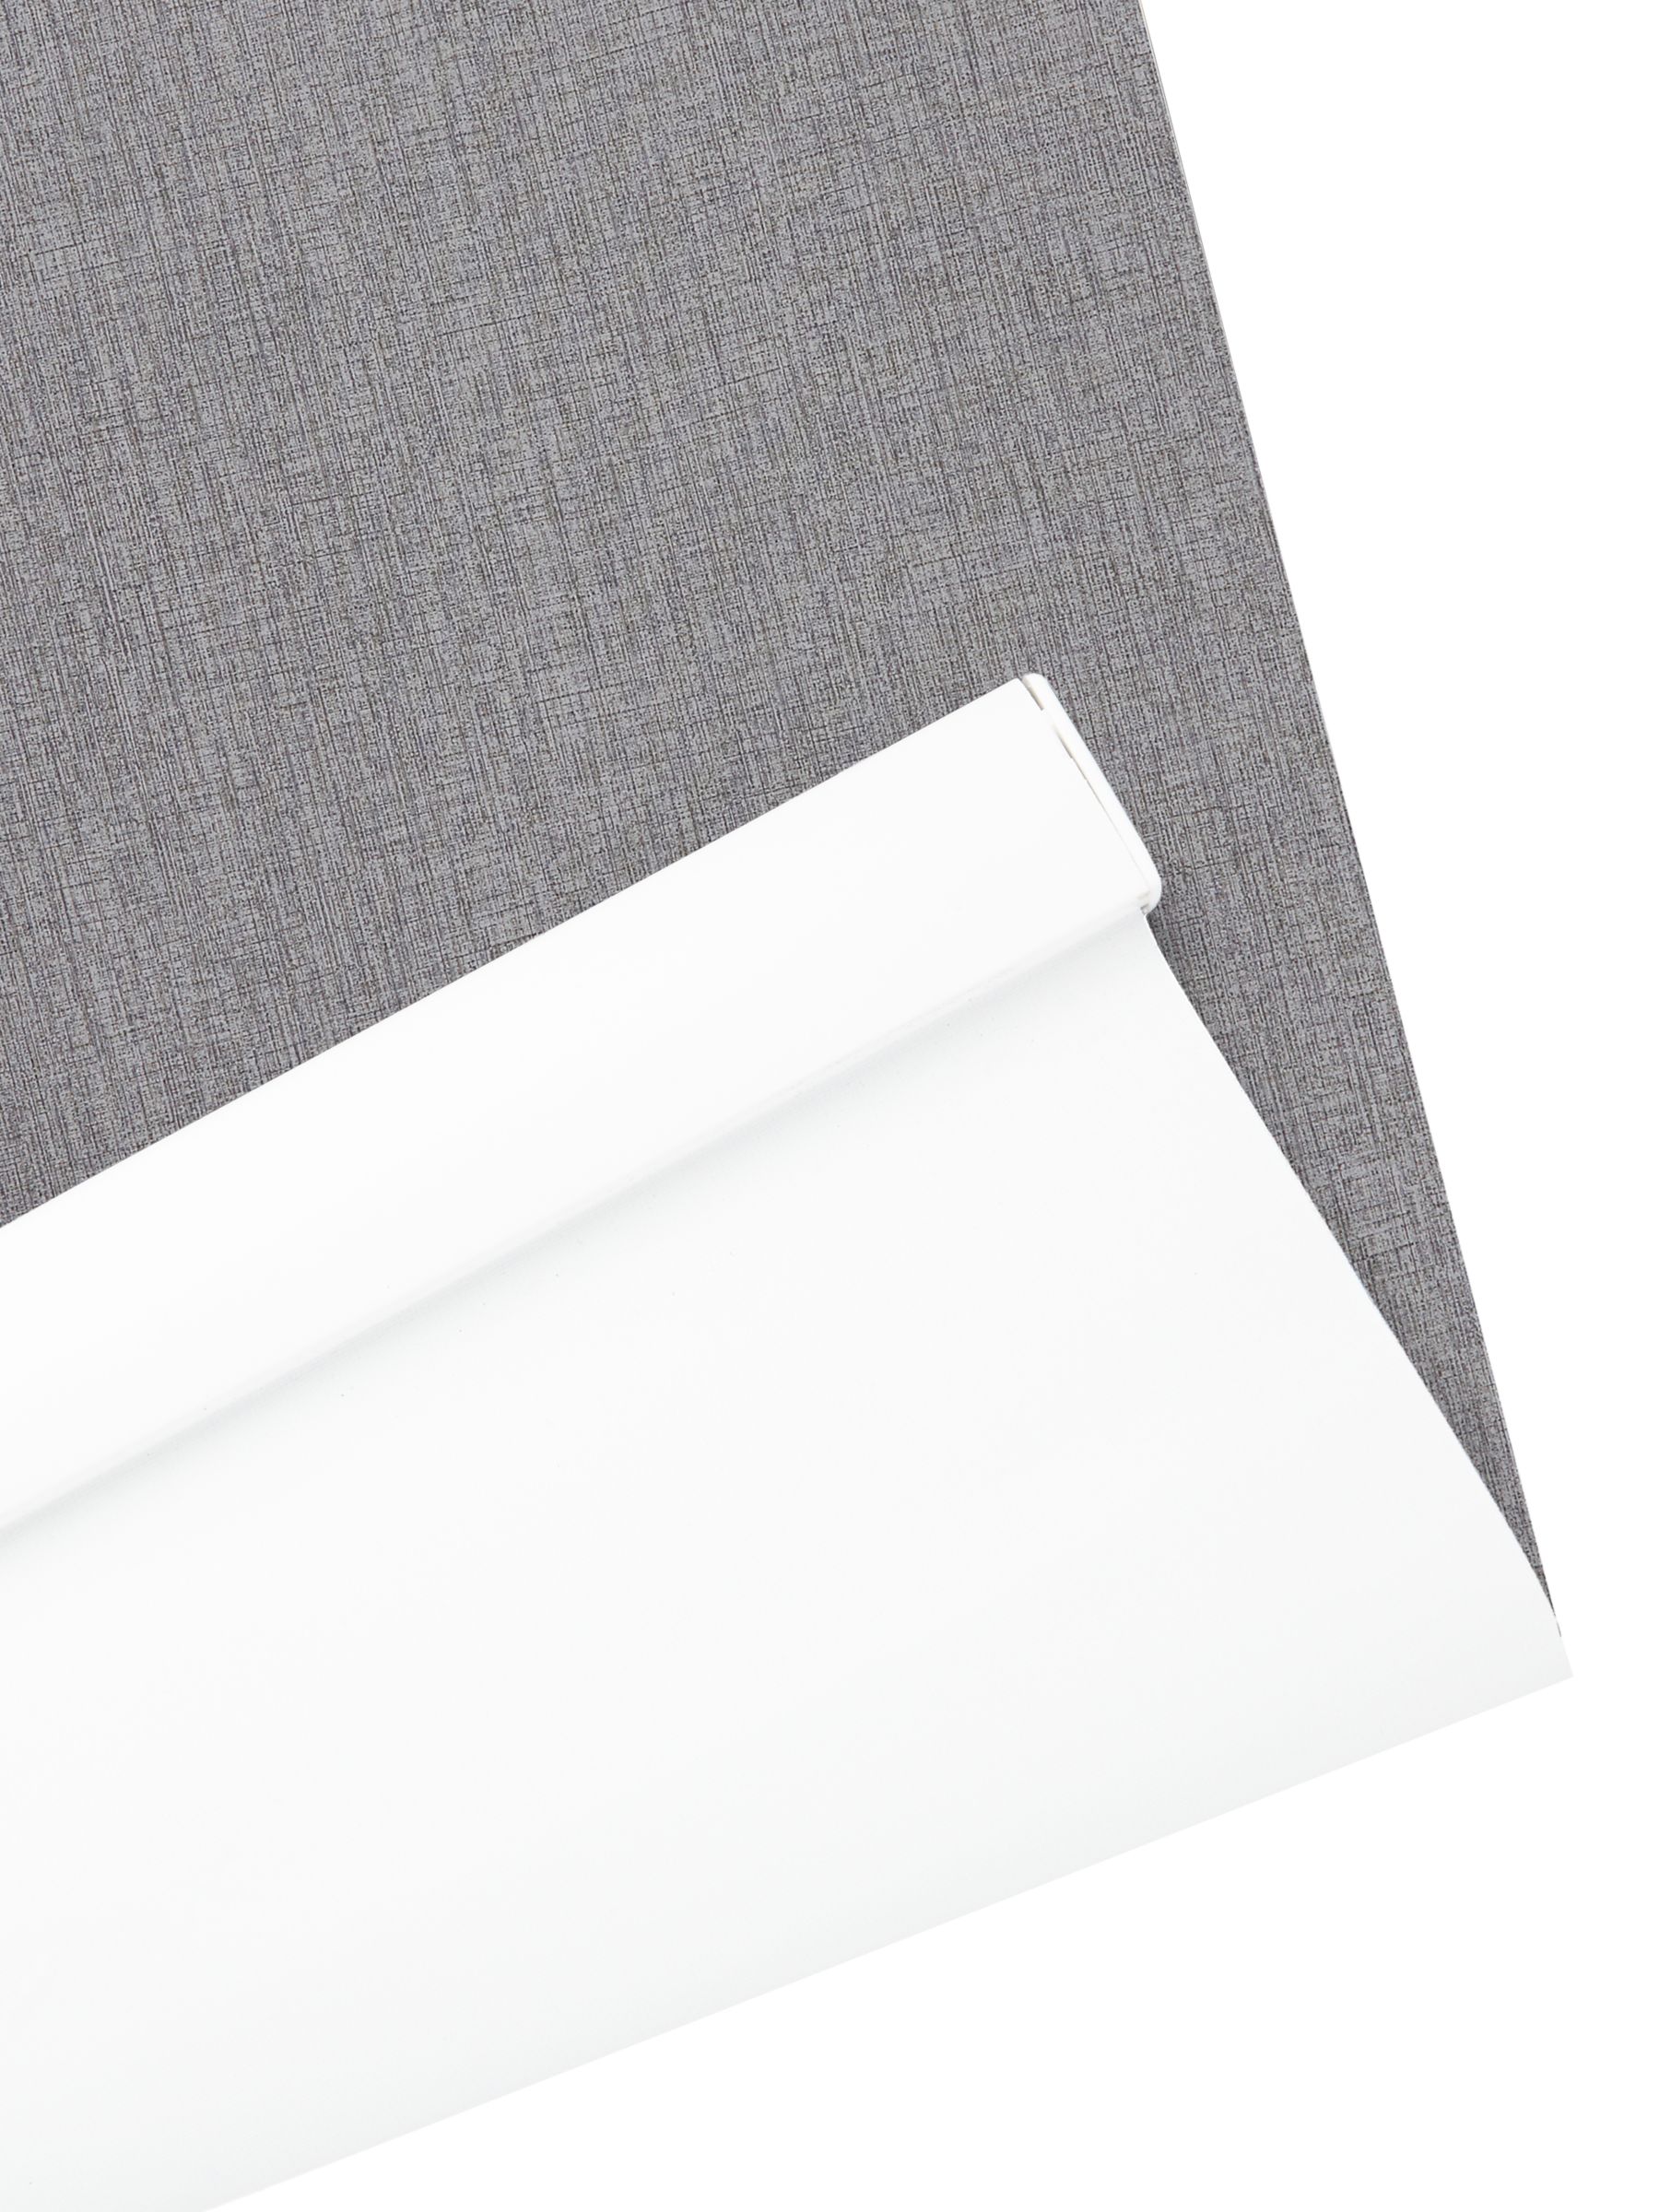 John Lewis Granada Plain Texture Made to Measure Blackout Roller Blind, Elegant Charcoal